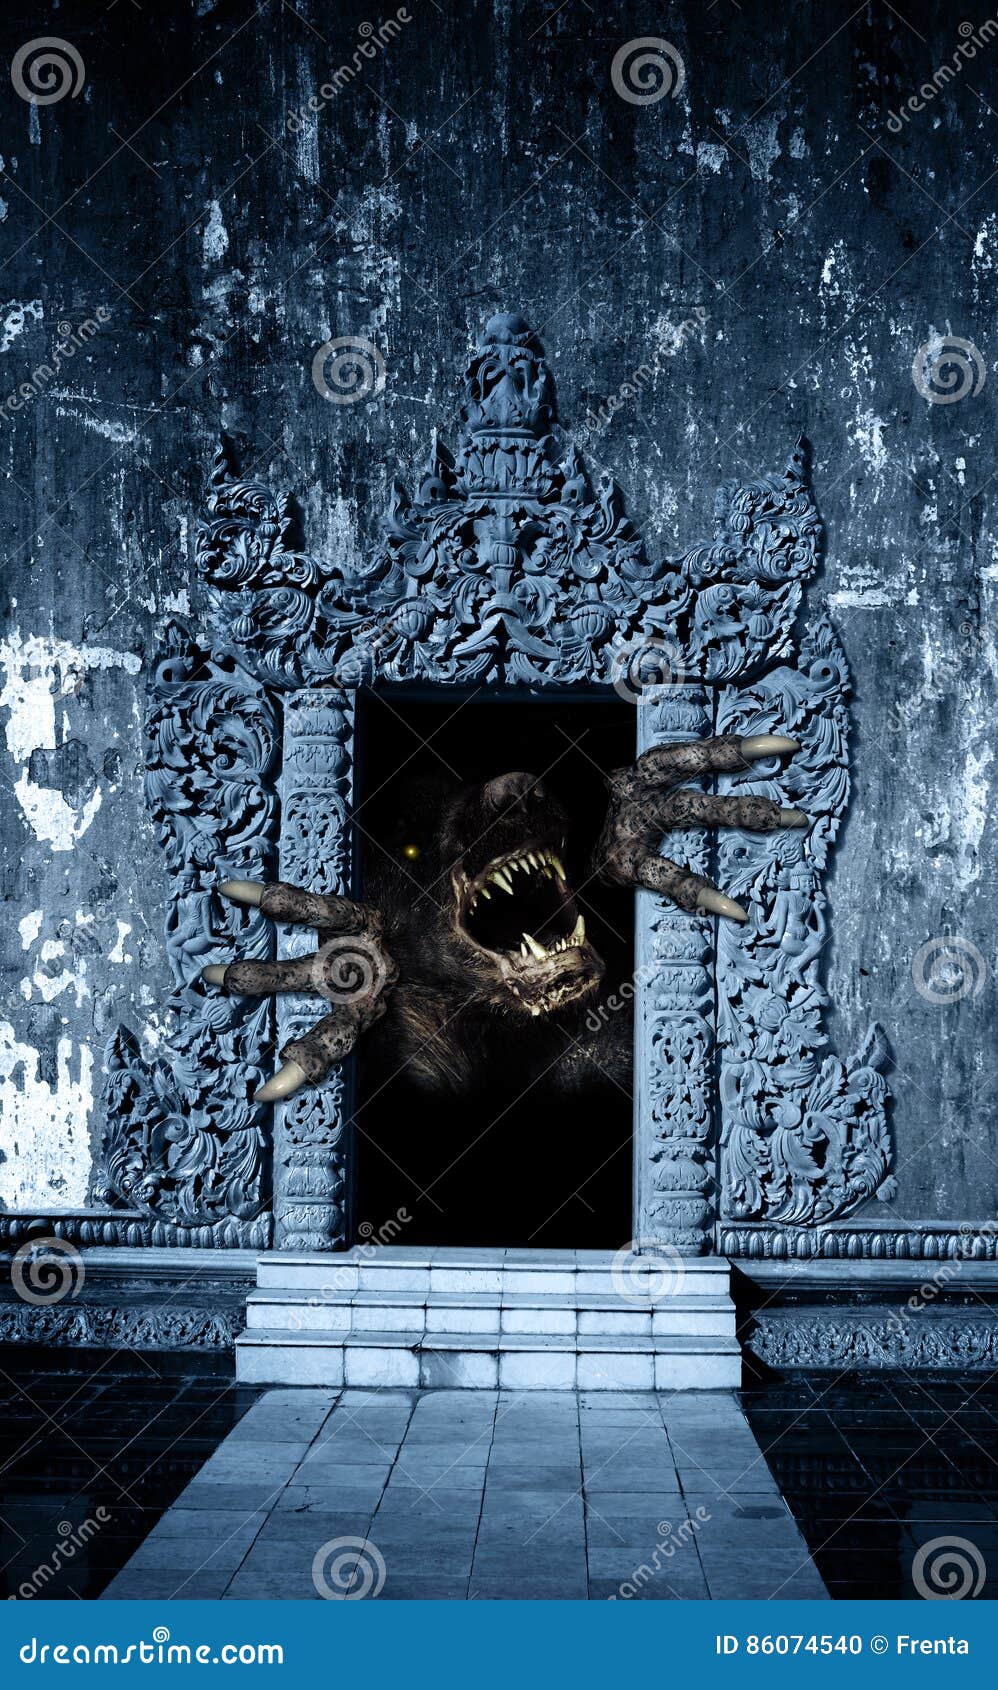 160+ Monster In Open Door Stock Photos, Pictures & Royalty-Free Images -  iStock